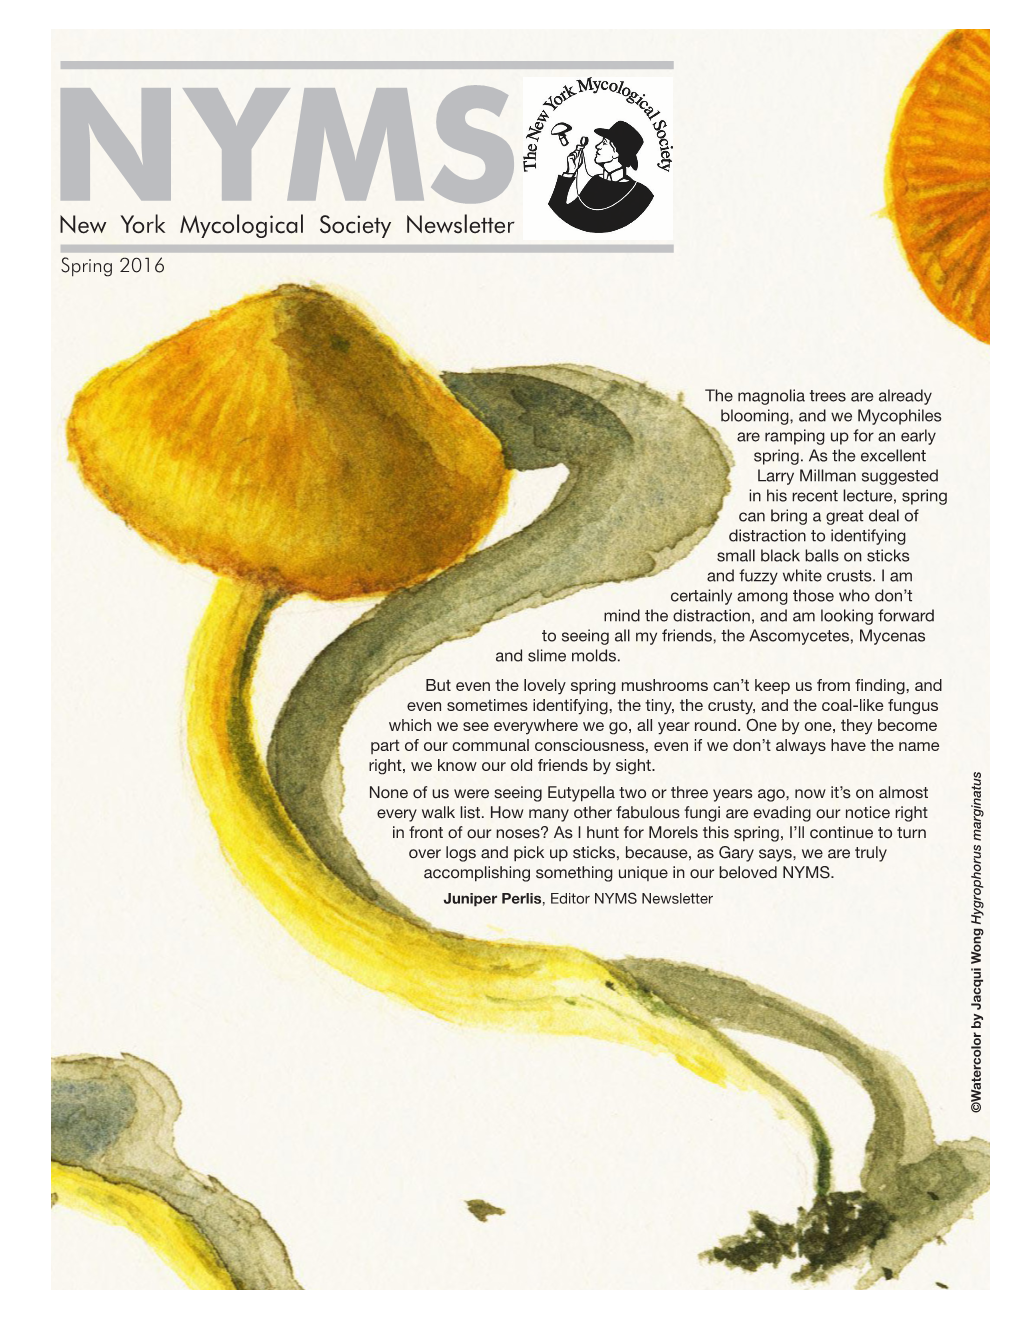 New York Mycological Society Newsletter Spring 2016